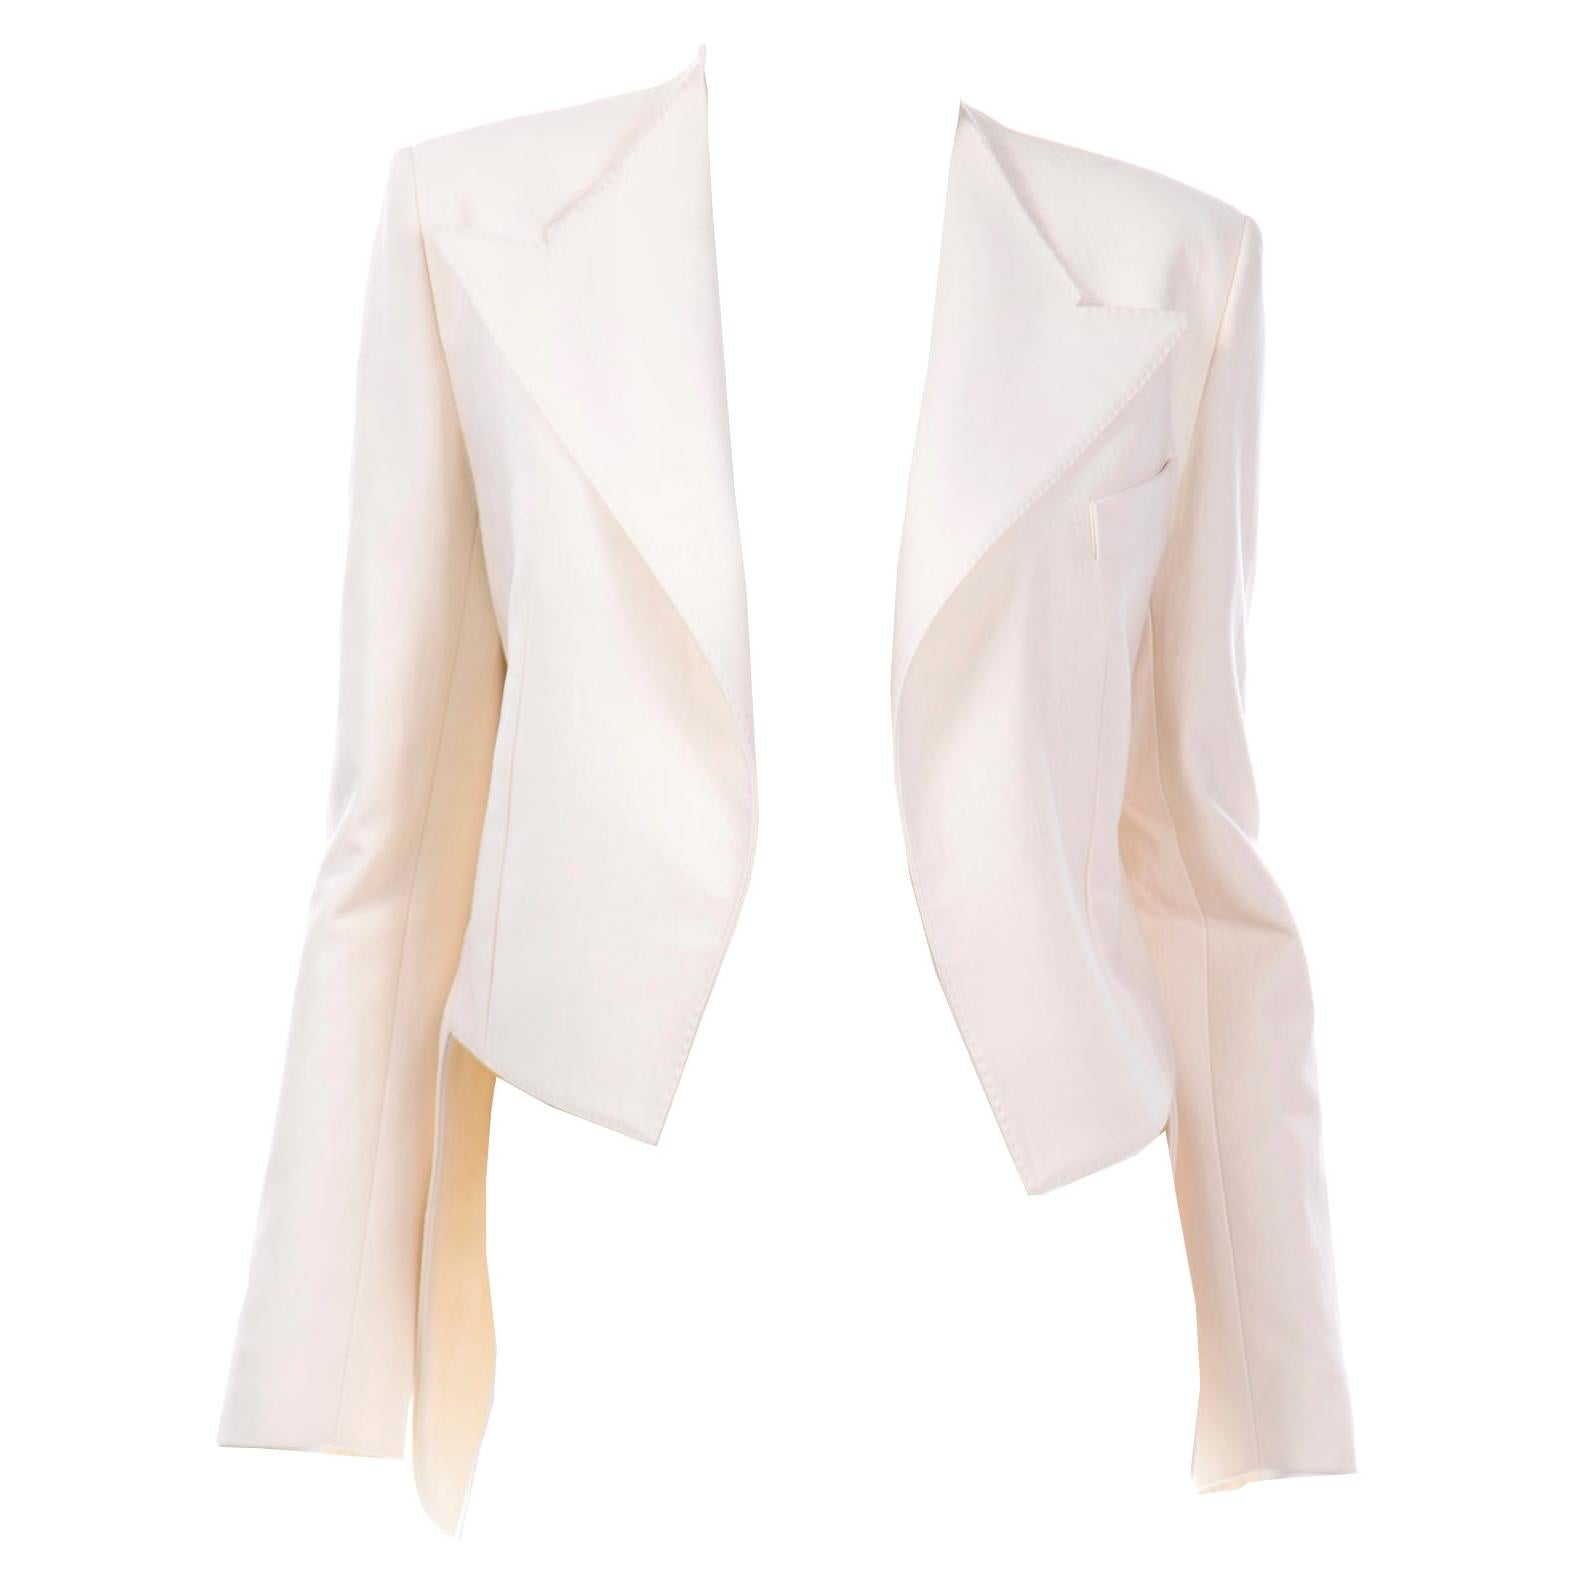 Alber Elbaz Lanvin Spring 2015 Cream Cutaway Tuxedo Style Jacket